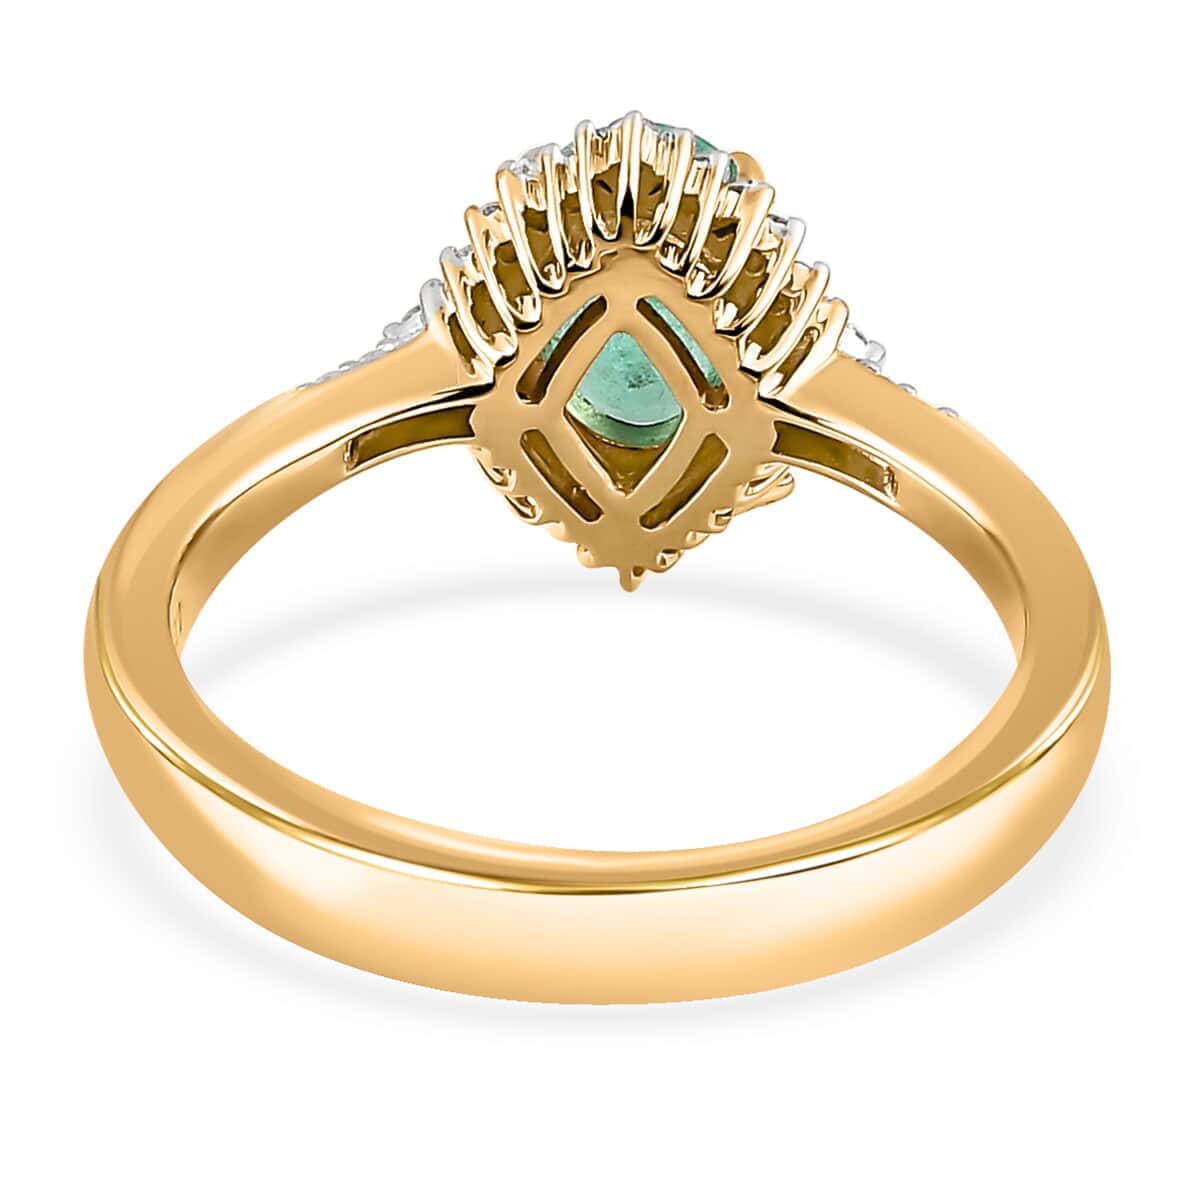 Luxoro 10K Yellow Gold Premium Ethiopian Emerald and G-H I3 Diamond Halo Ring (Size 7.0) 1.40 ctw image number 4